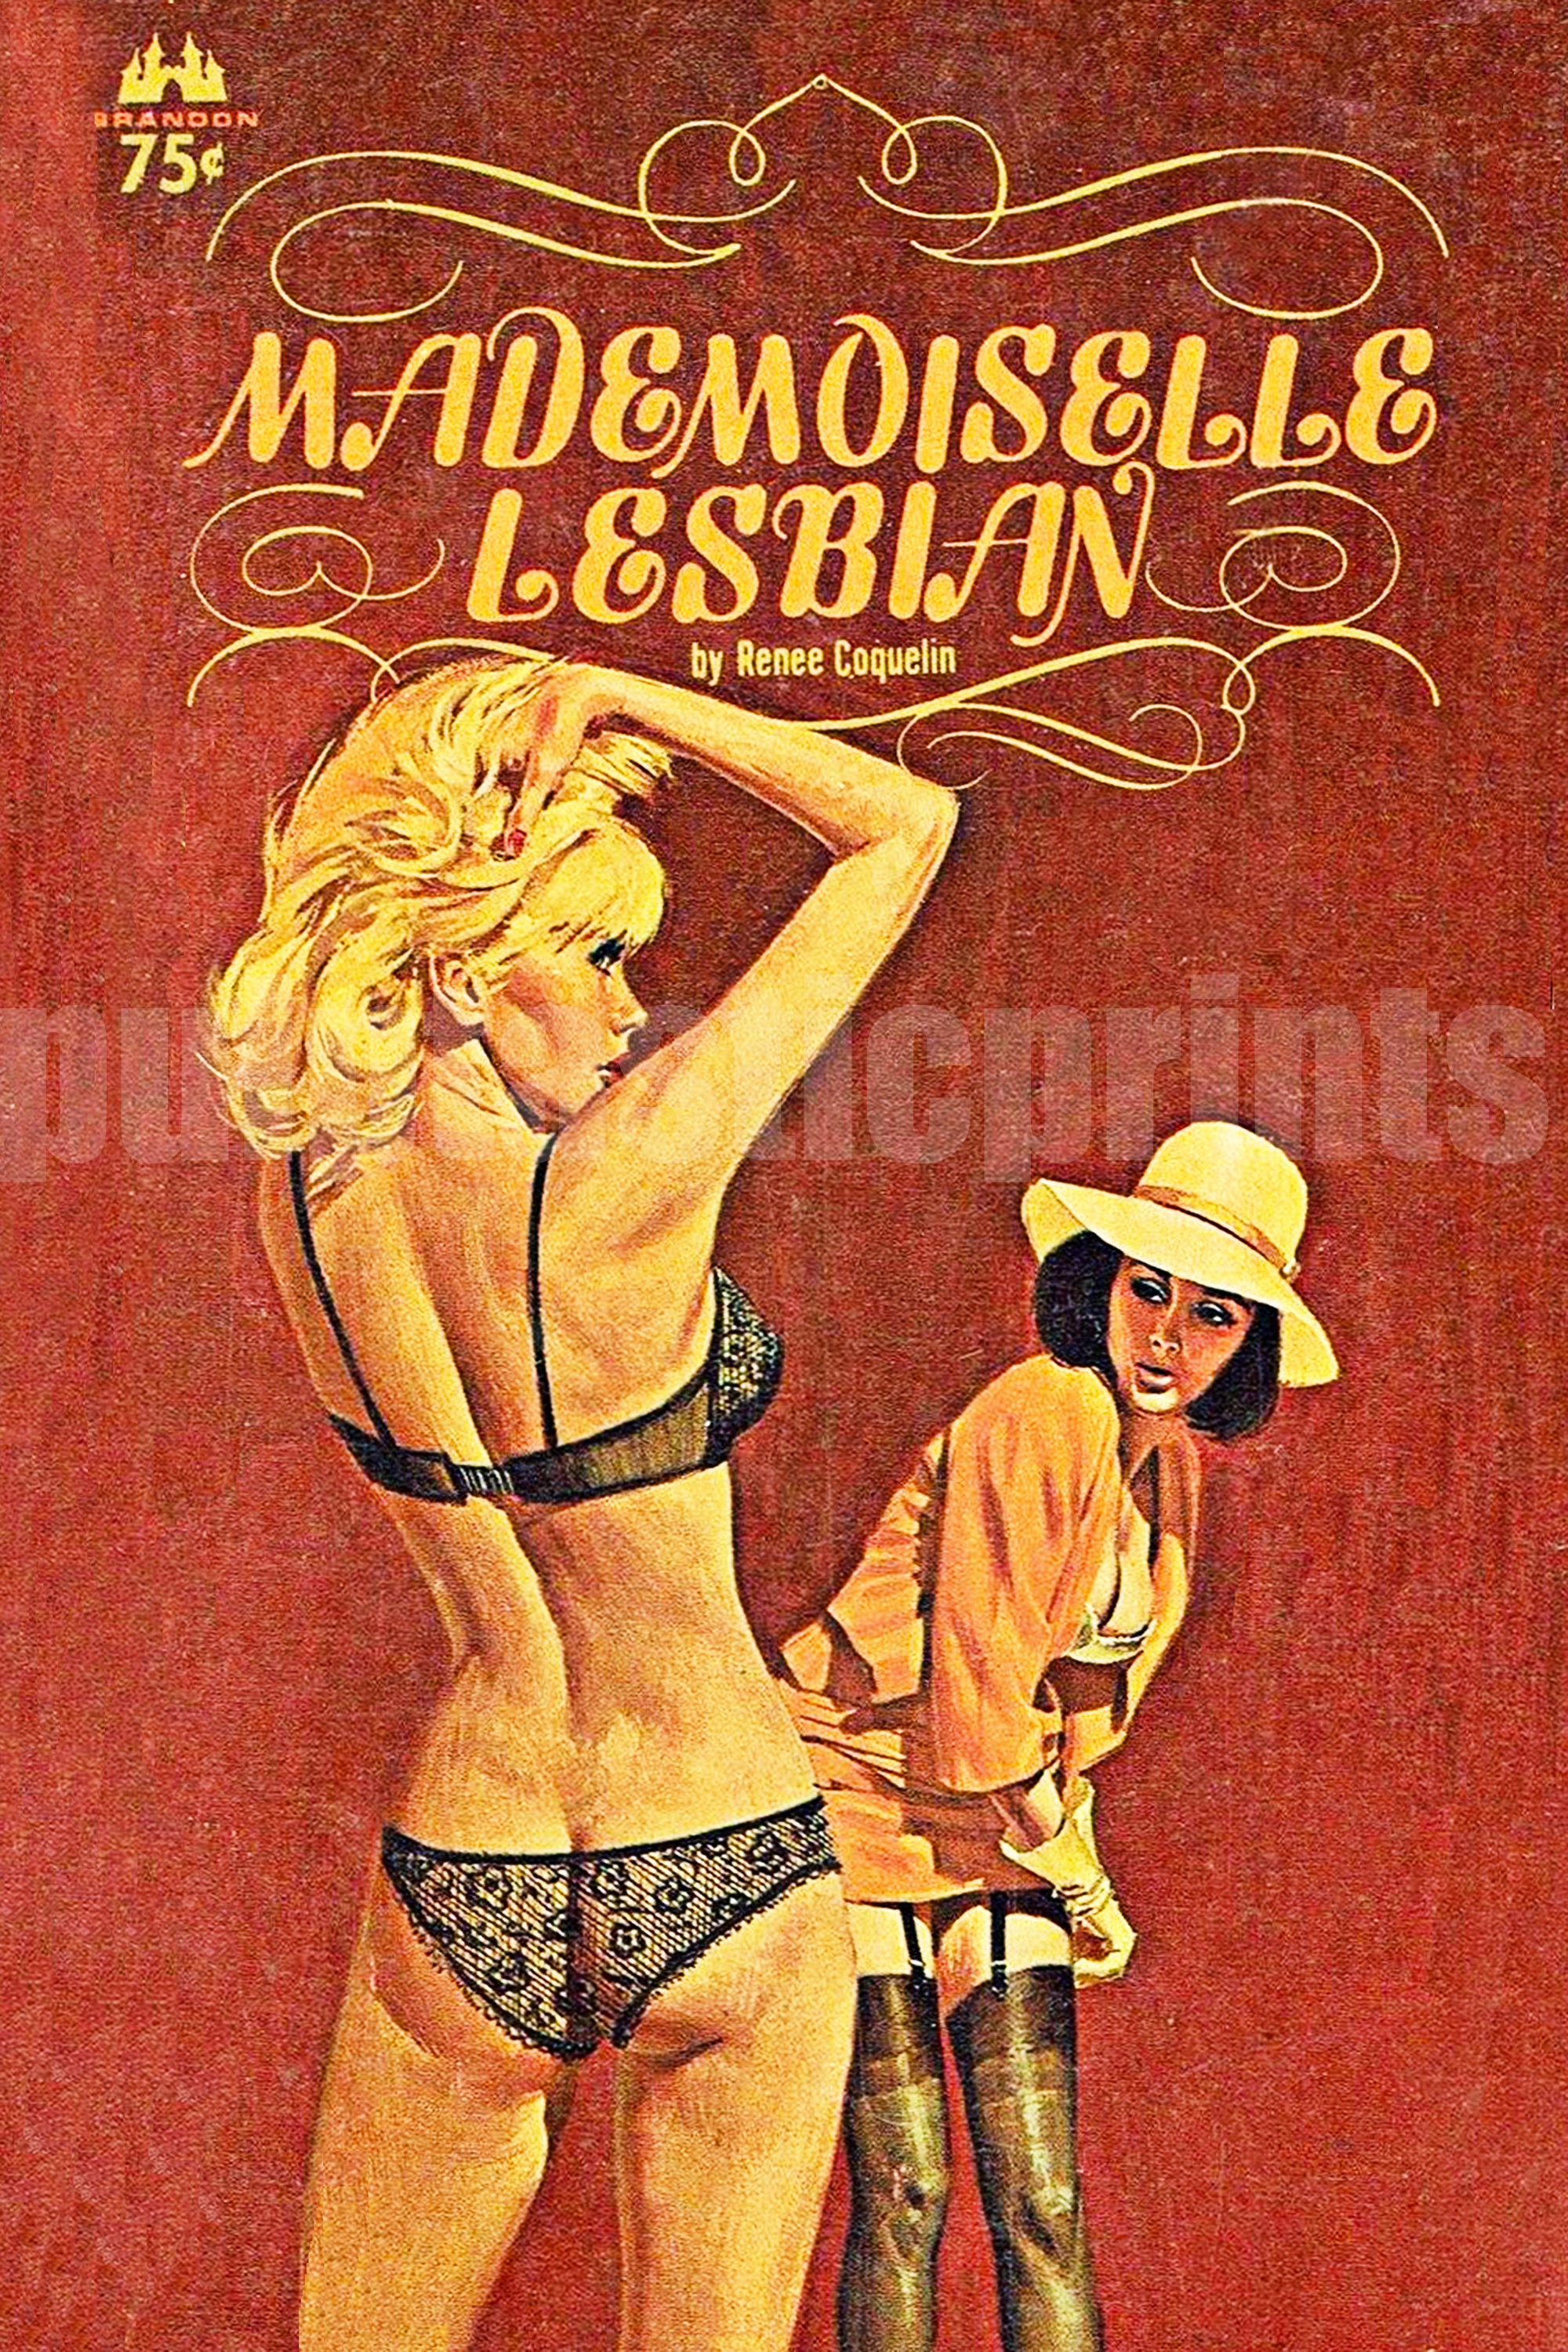 Vintage Lesbian Porn Magazine Covers - Lesbian Print Mademoiselle Lesbian Vintage Pulp Paperback - Etsy